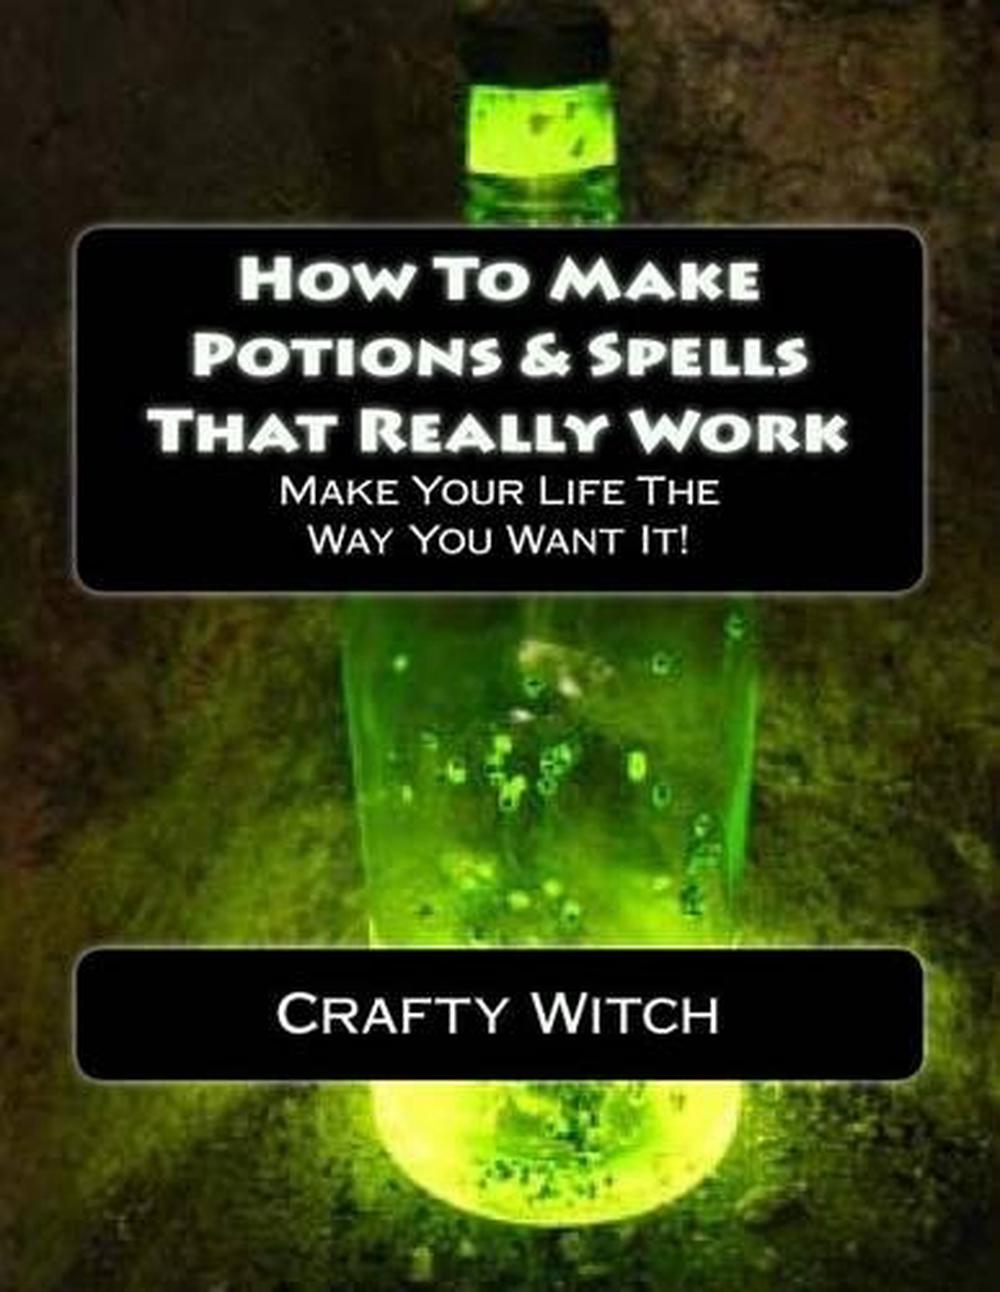 spellcaster university potion recipes